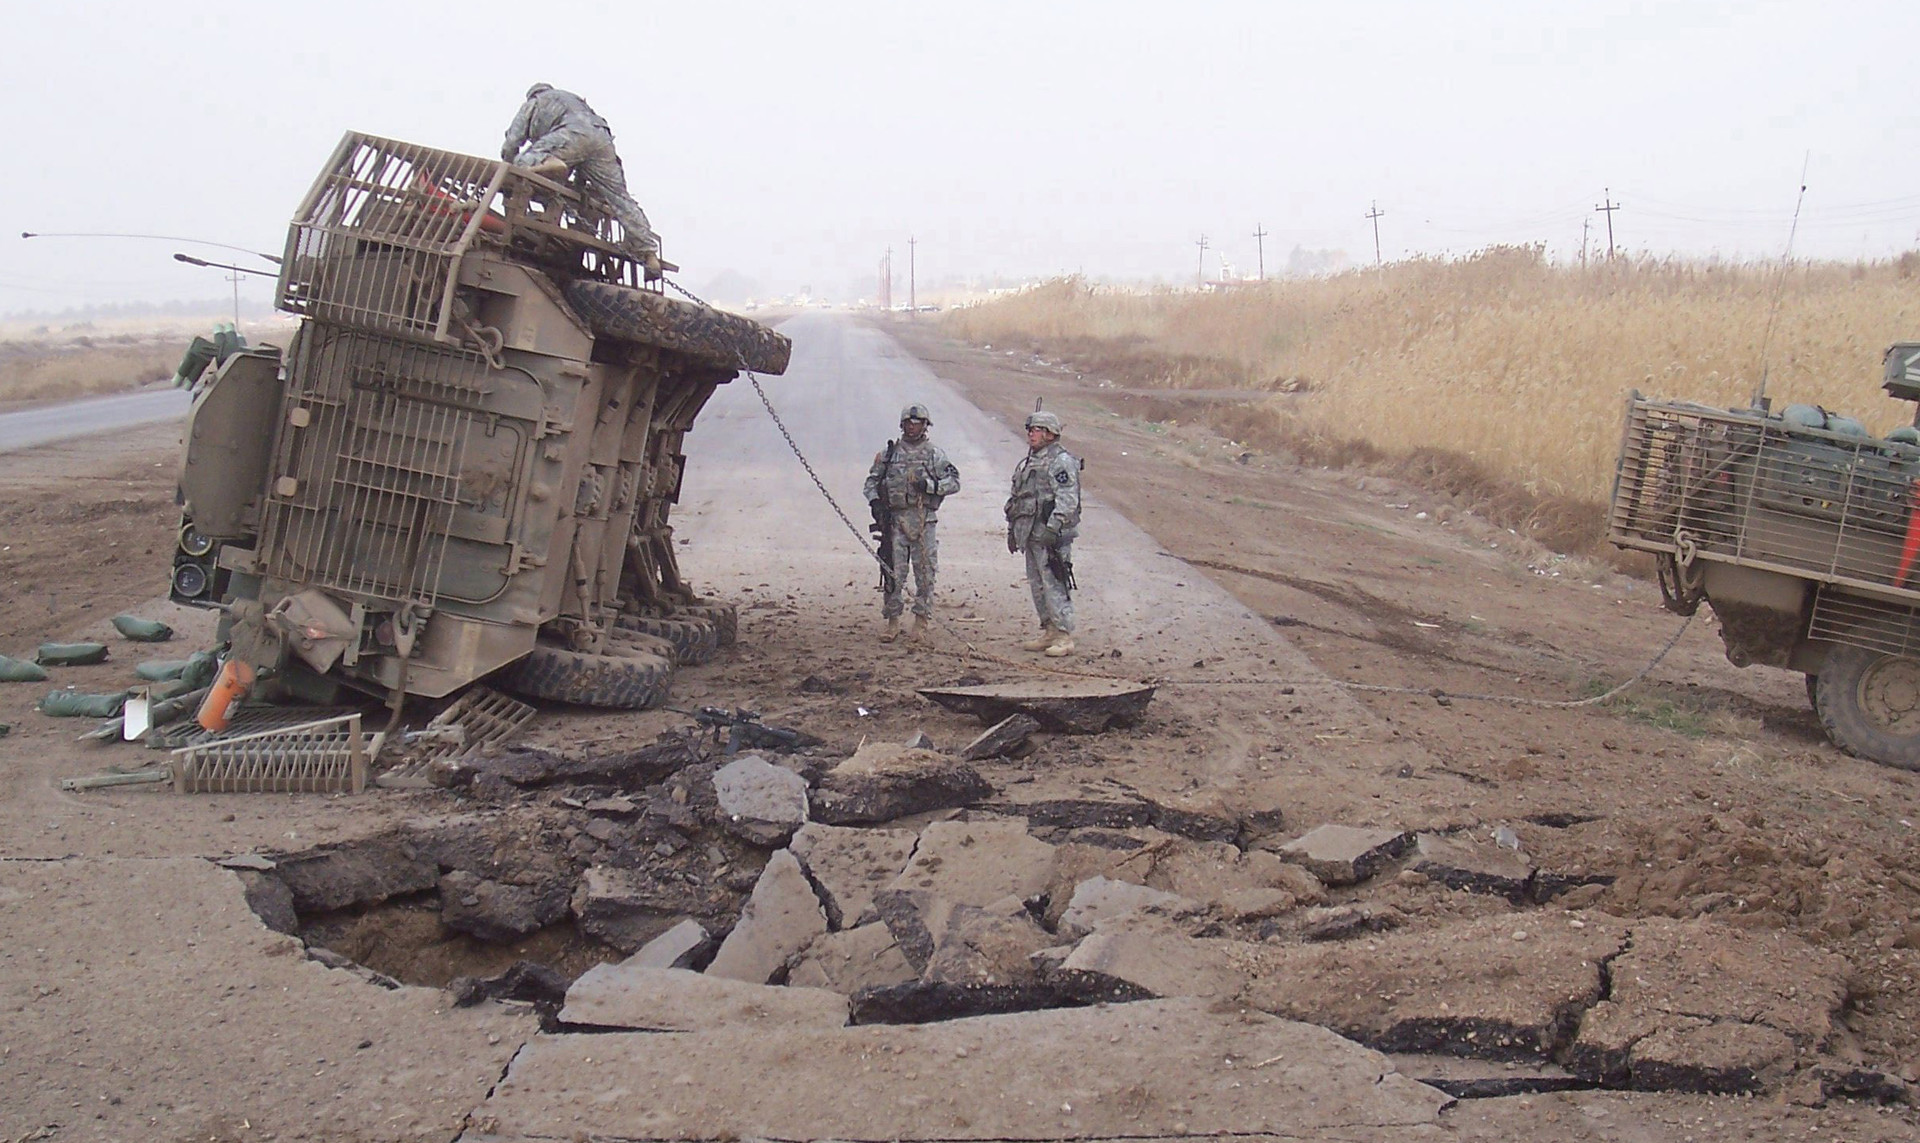 Prevrnjeni Stryker je zapeljal na improvizirano eksplozivno sredstvo, Irak 2007